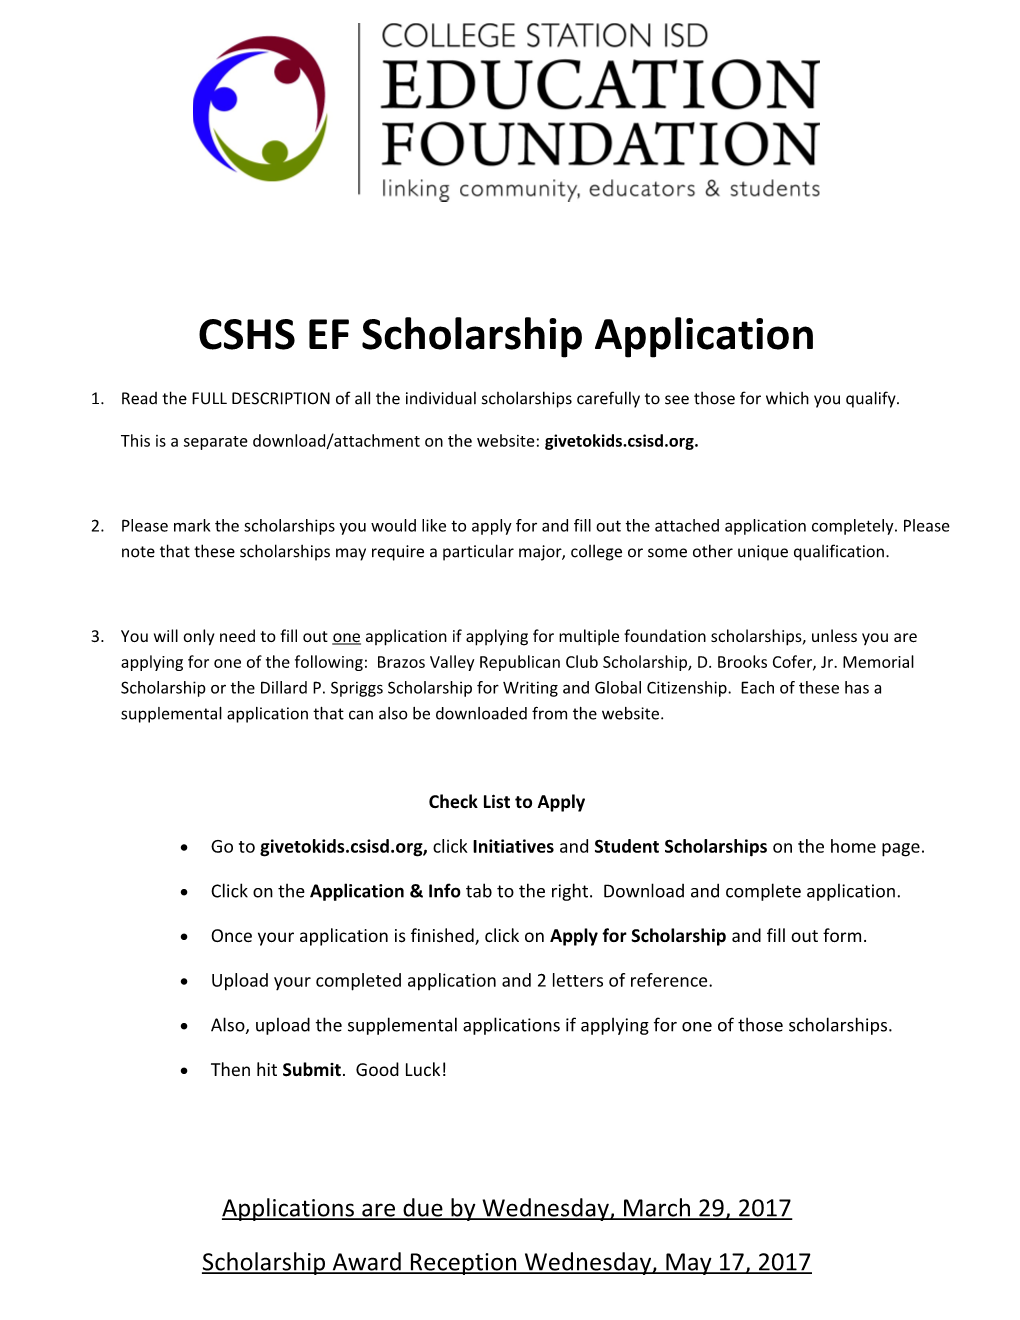 CSHS EF Scholarship Application